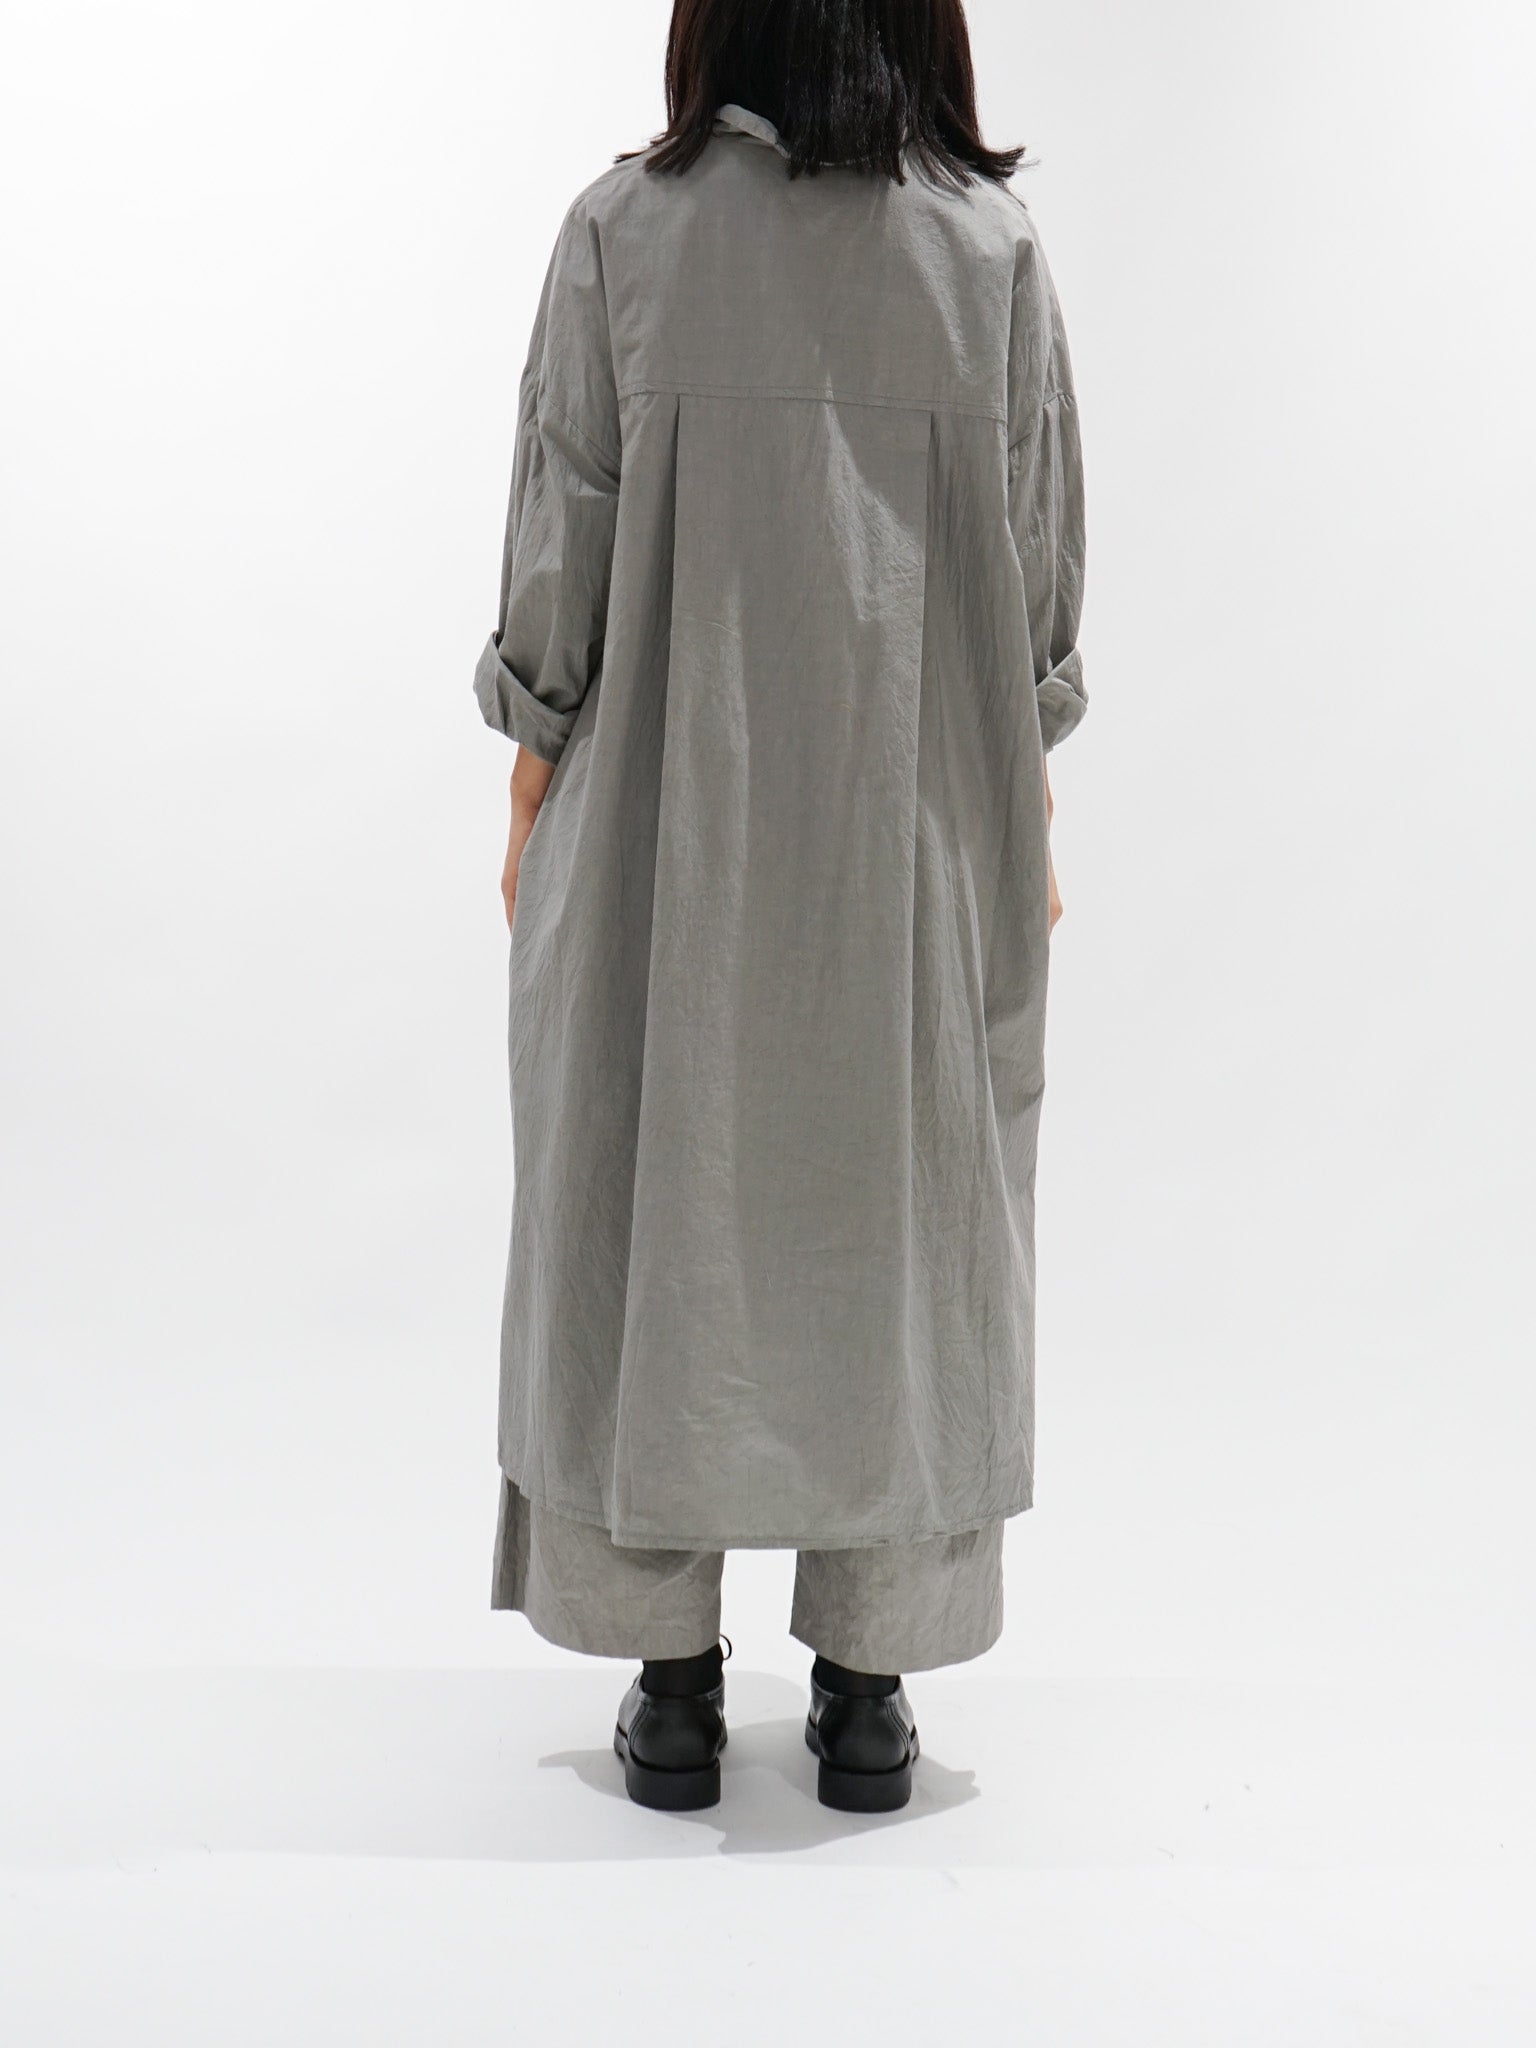 Namu Shop - Veritecoeur Tailored Collar Dress - Gray